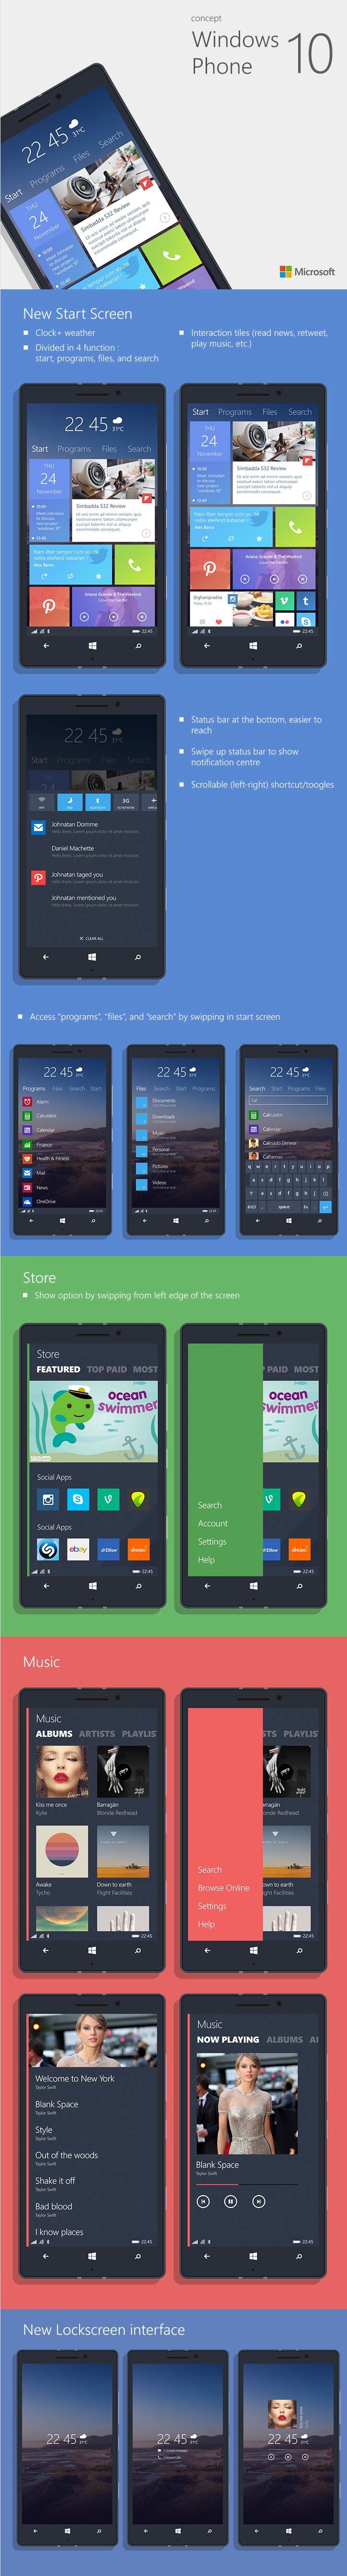 Windows Phone 10 Konzept Ghani Pradita